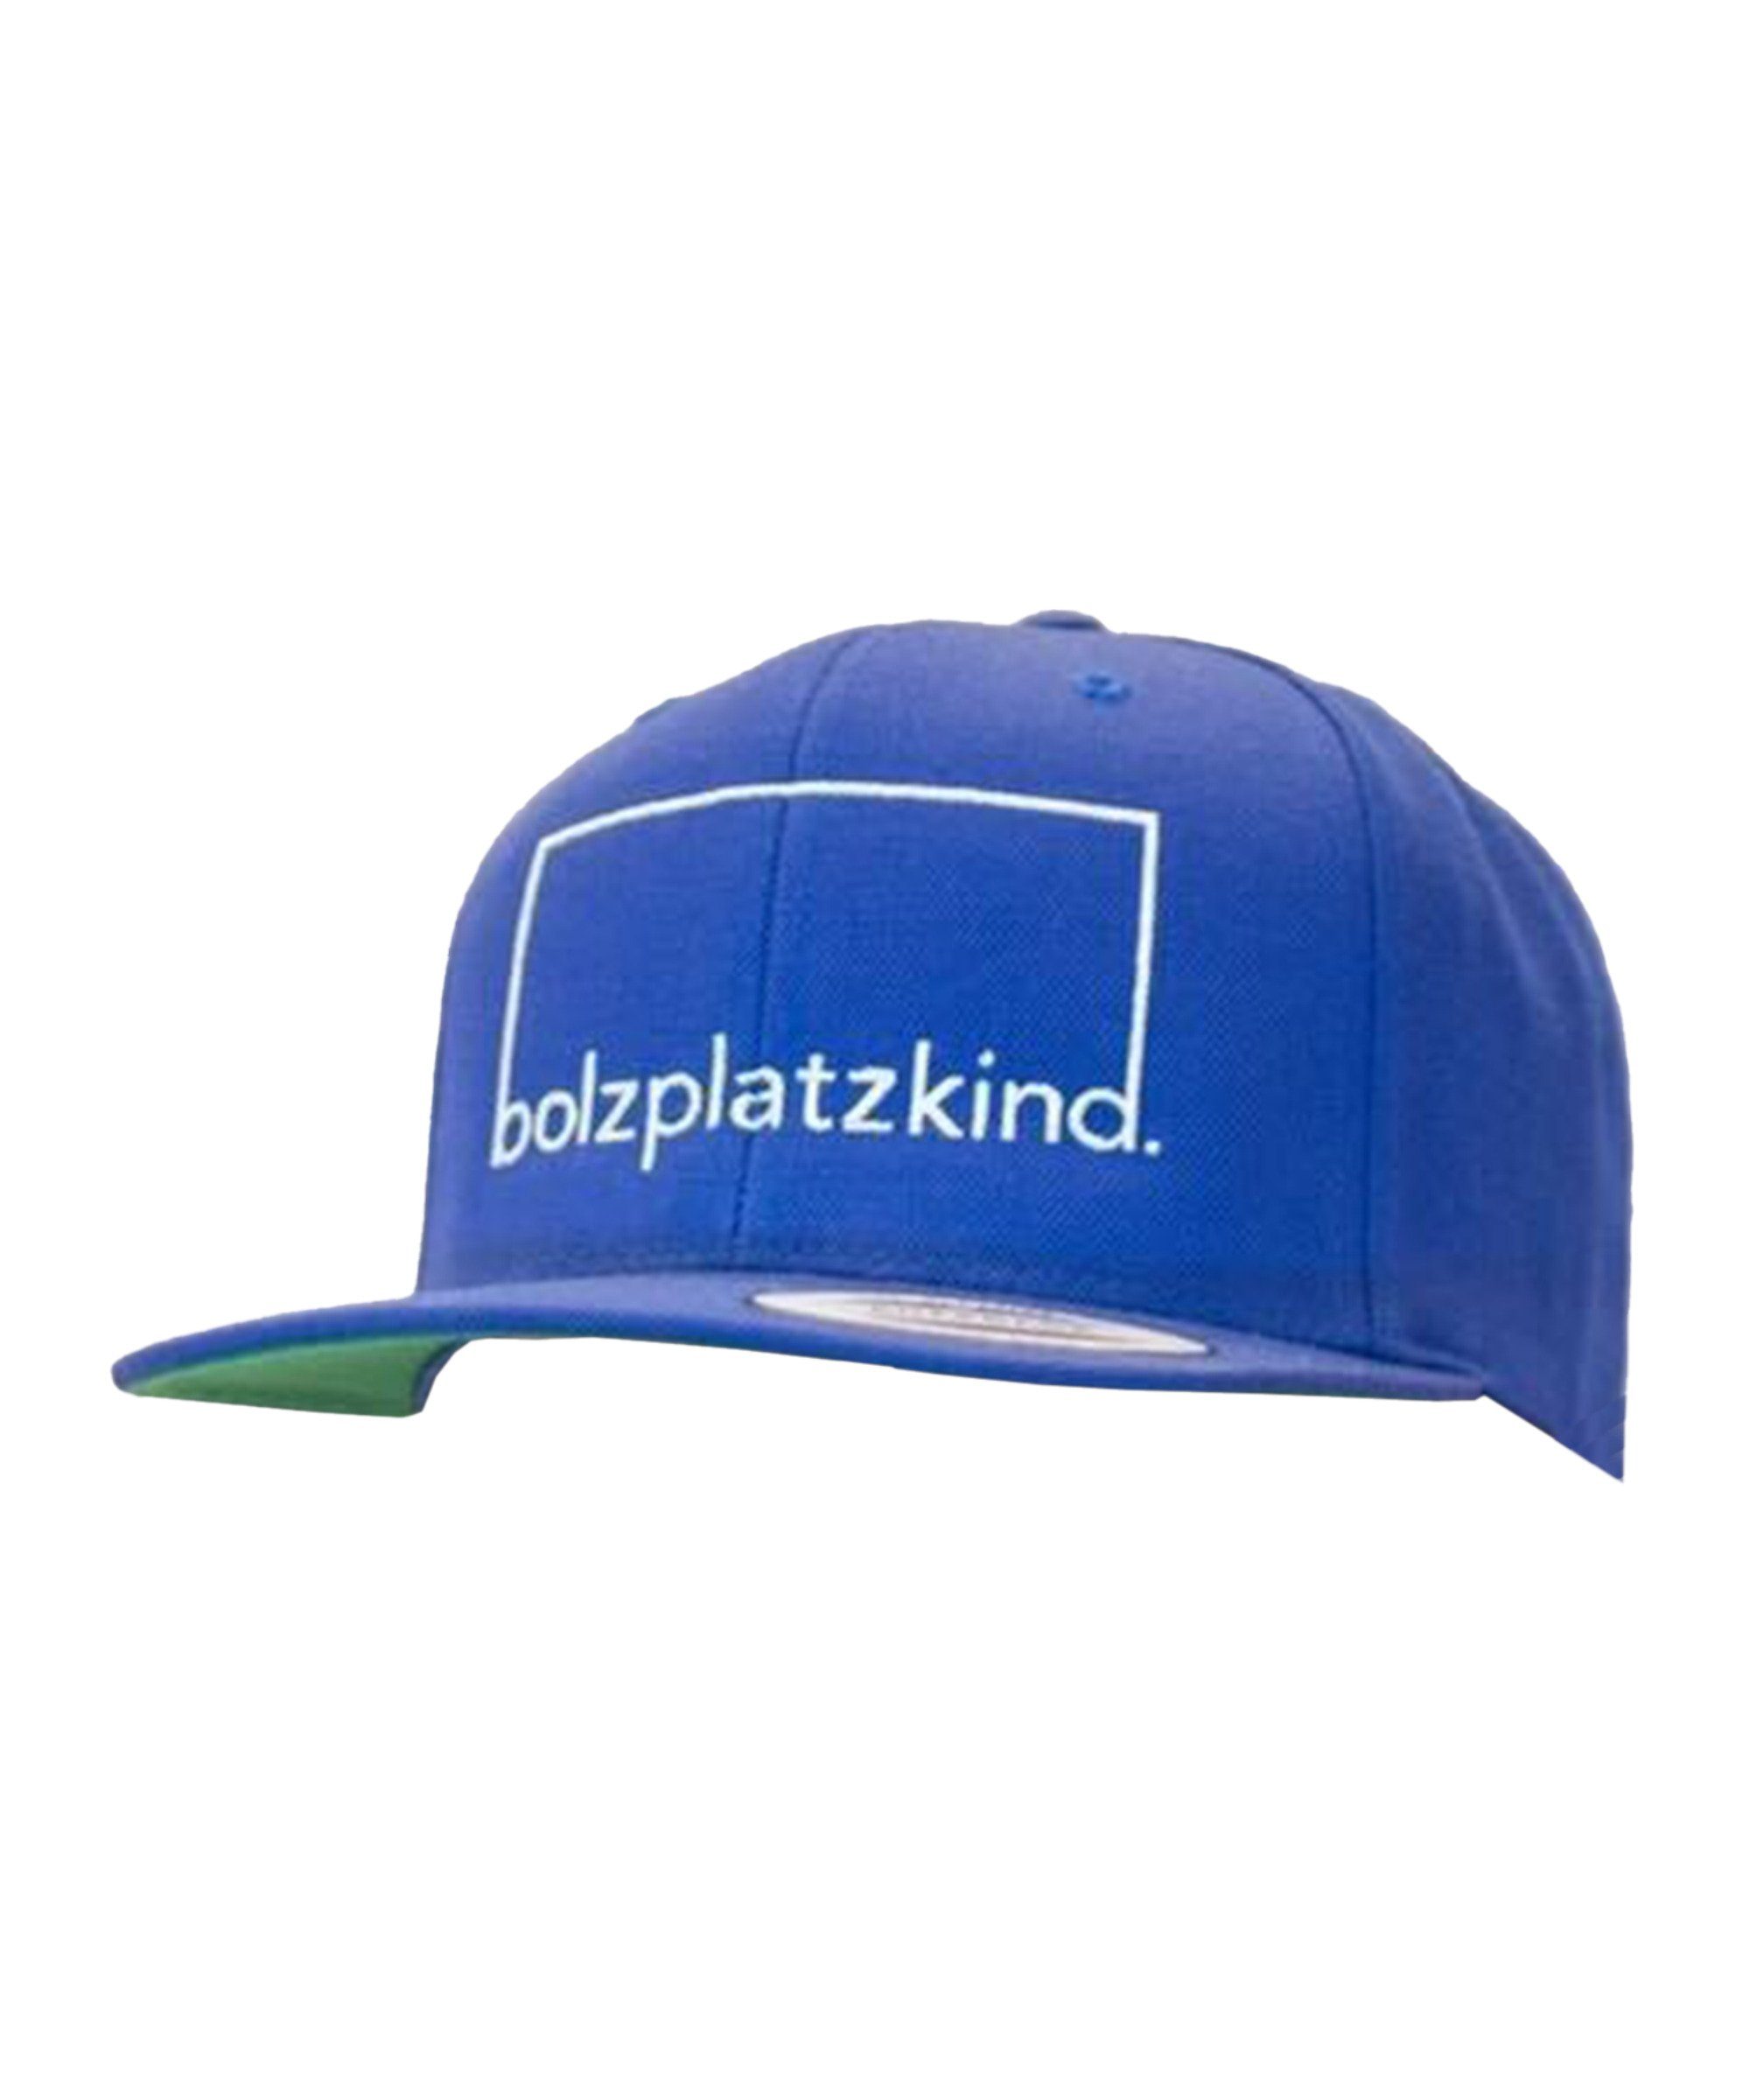 Bolzplatzkind Baseball Cap Classic Snapback Cap Hell blauweiss